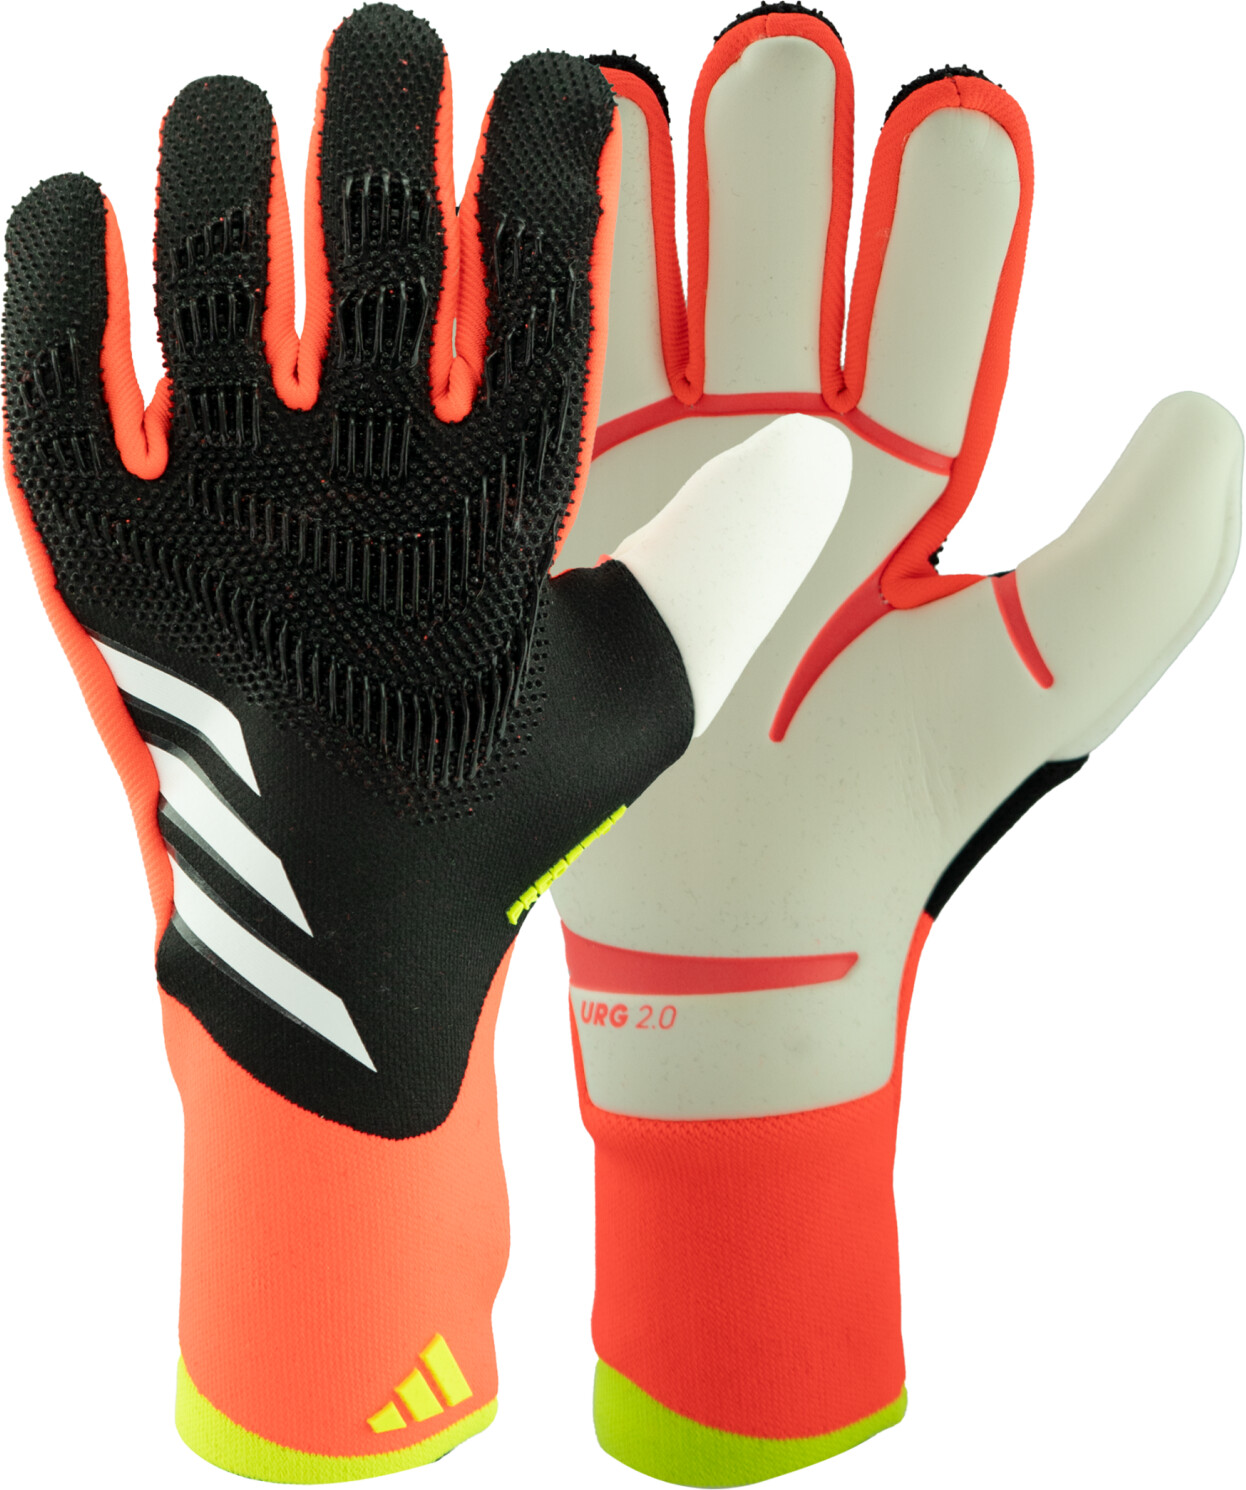 Photos - Other inventory Adidas Predator Pro Goalkeeper Gloves black/solar red/solar yellow 